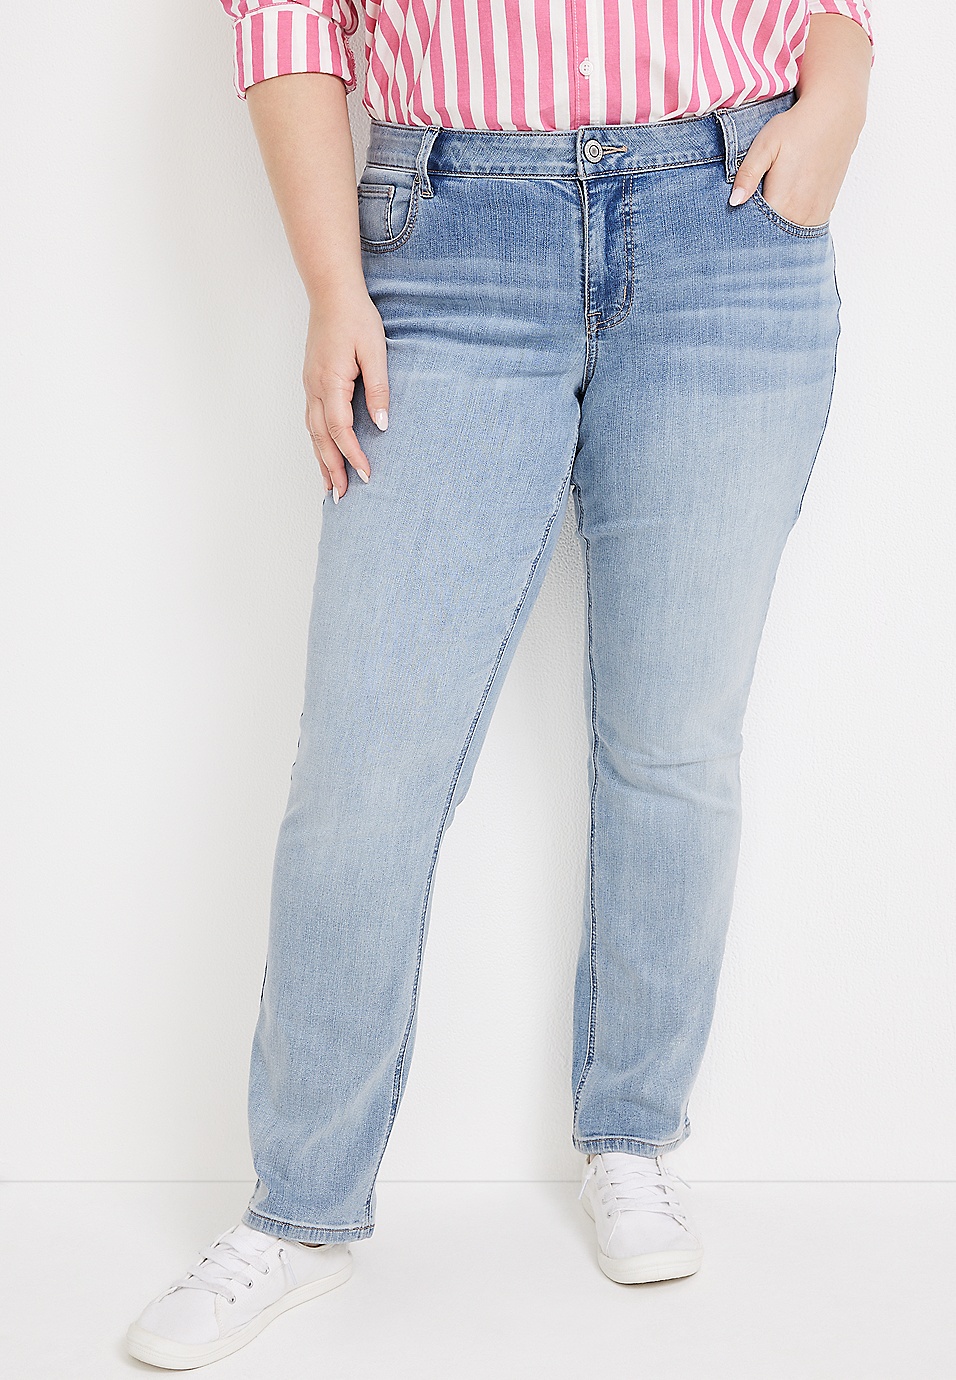 Womens Plus Size Mid Rise Slim fit Jeans Leggings Jeggings 16 18